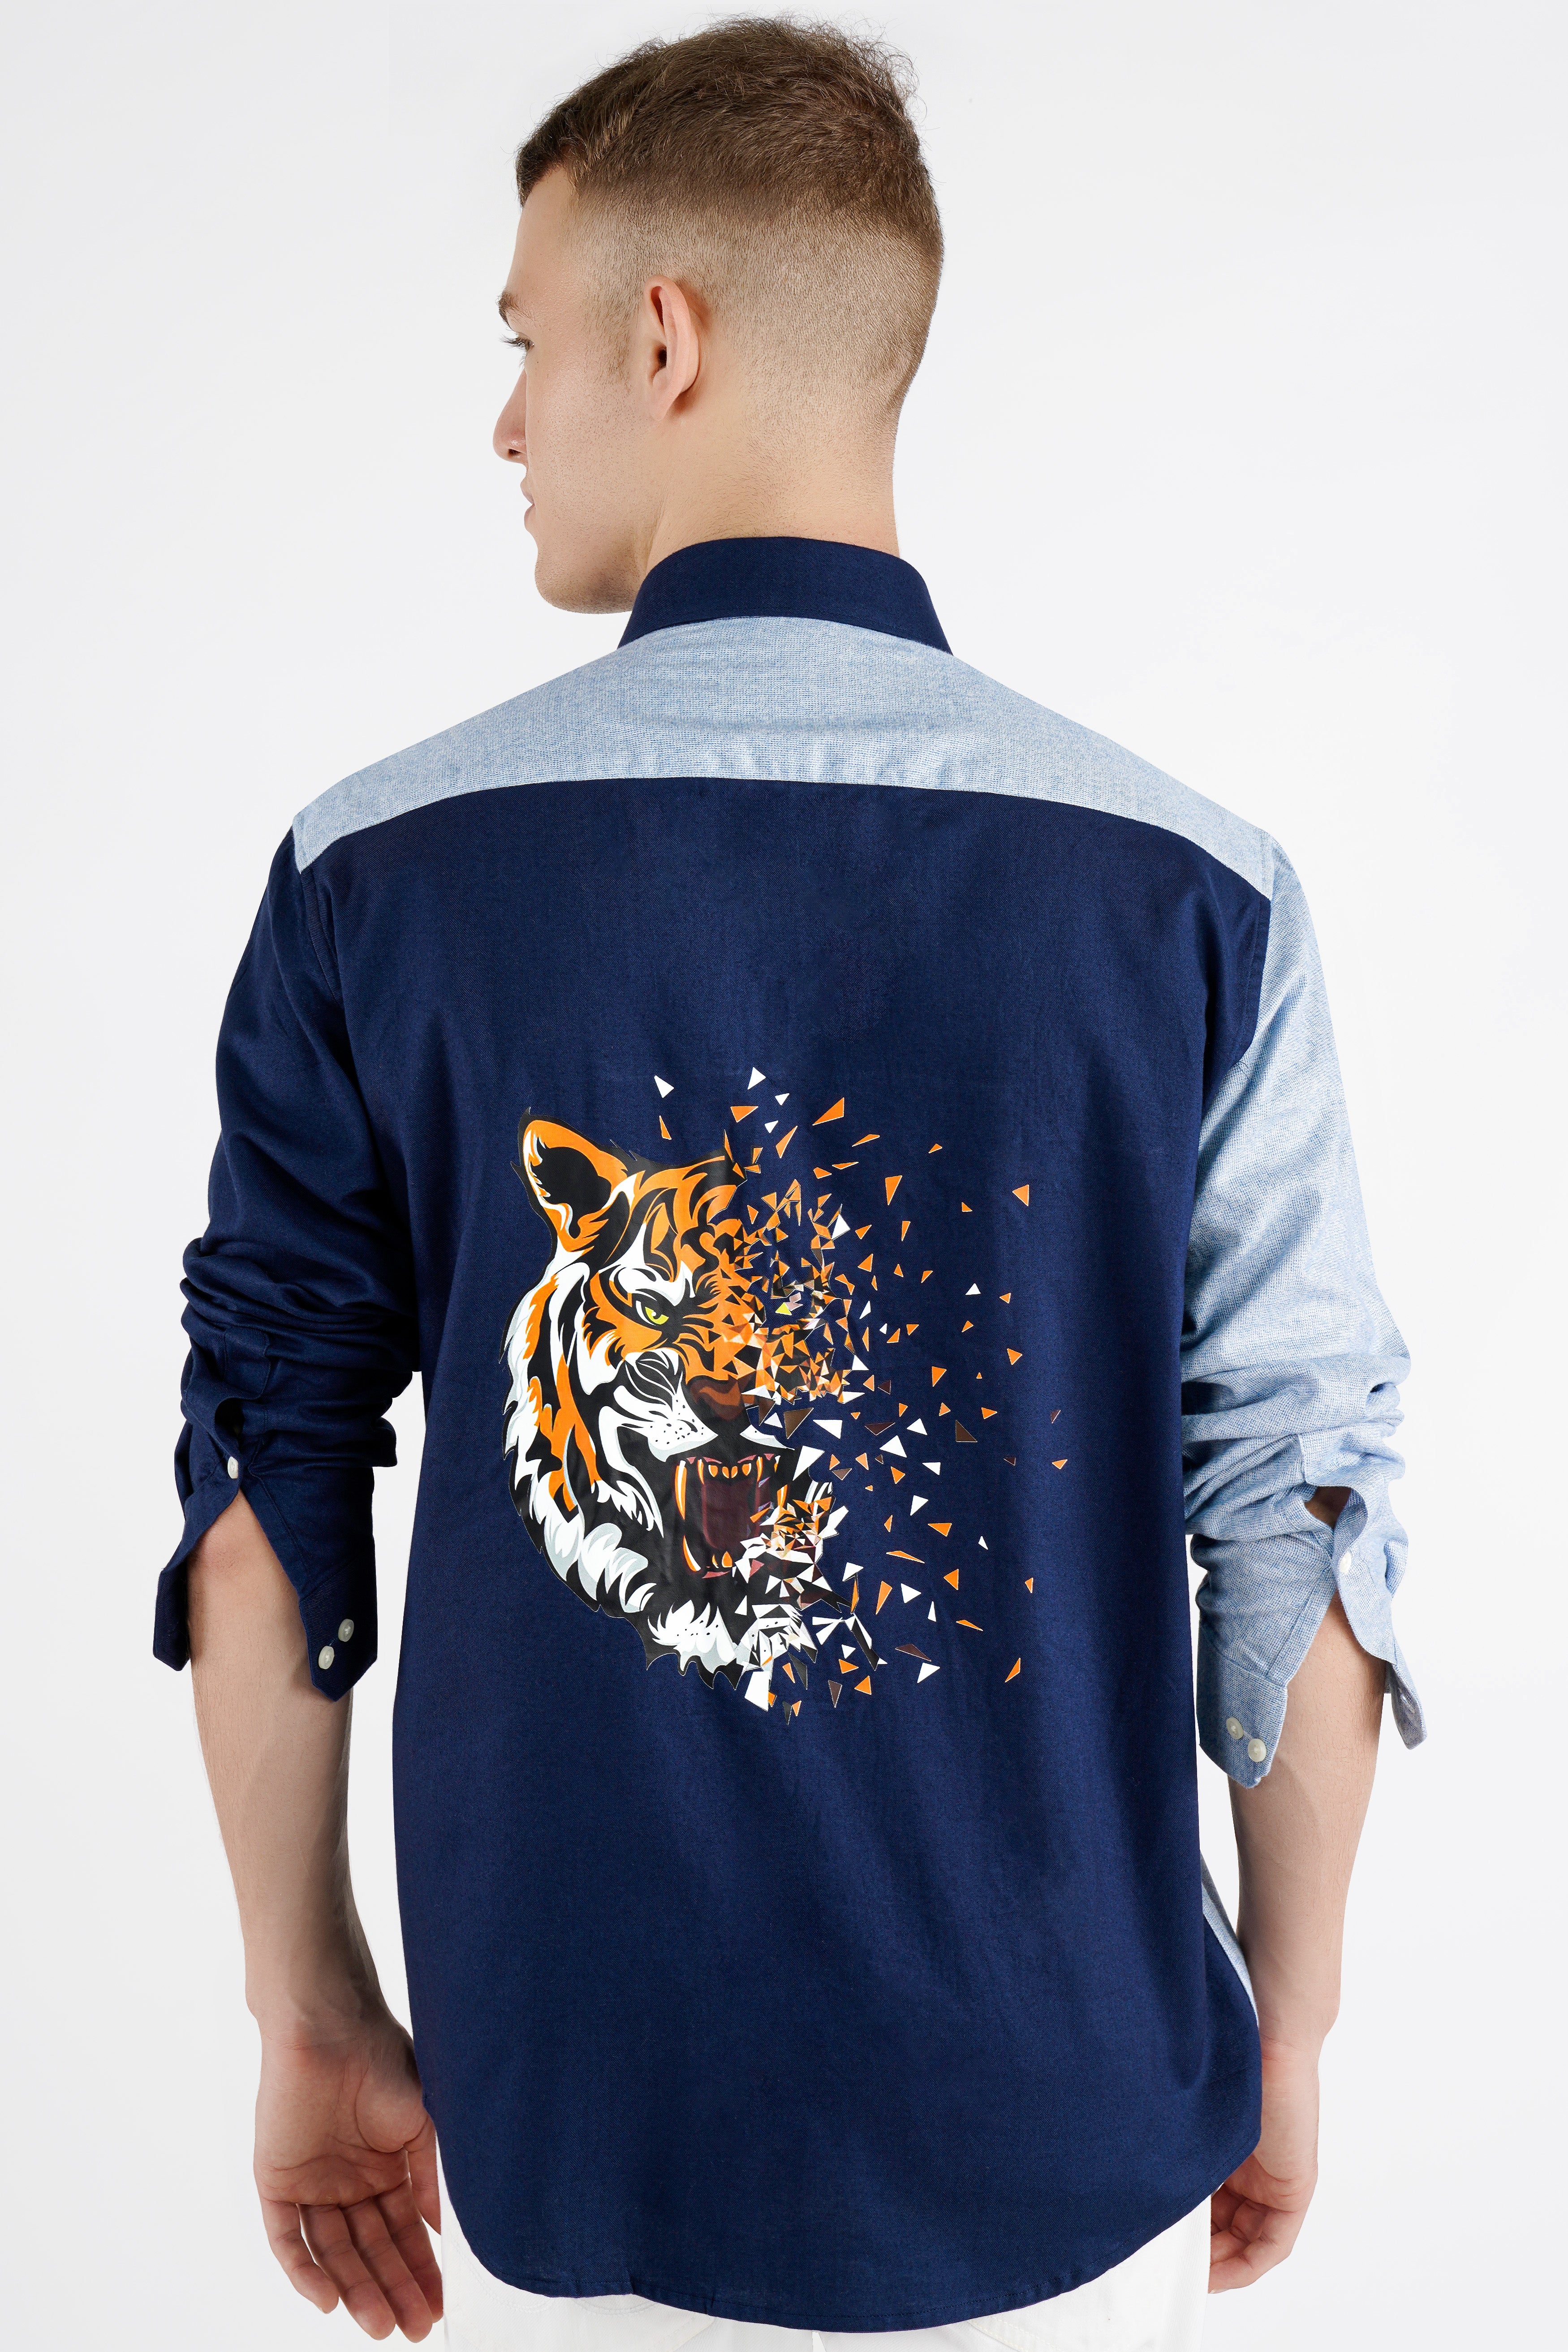 Cadet Blue with Midnight Navy Blue Tiger Printed Twill Premium Cotton Designer Shirt